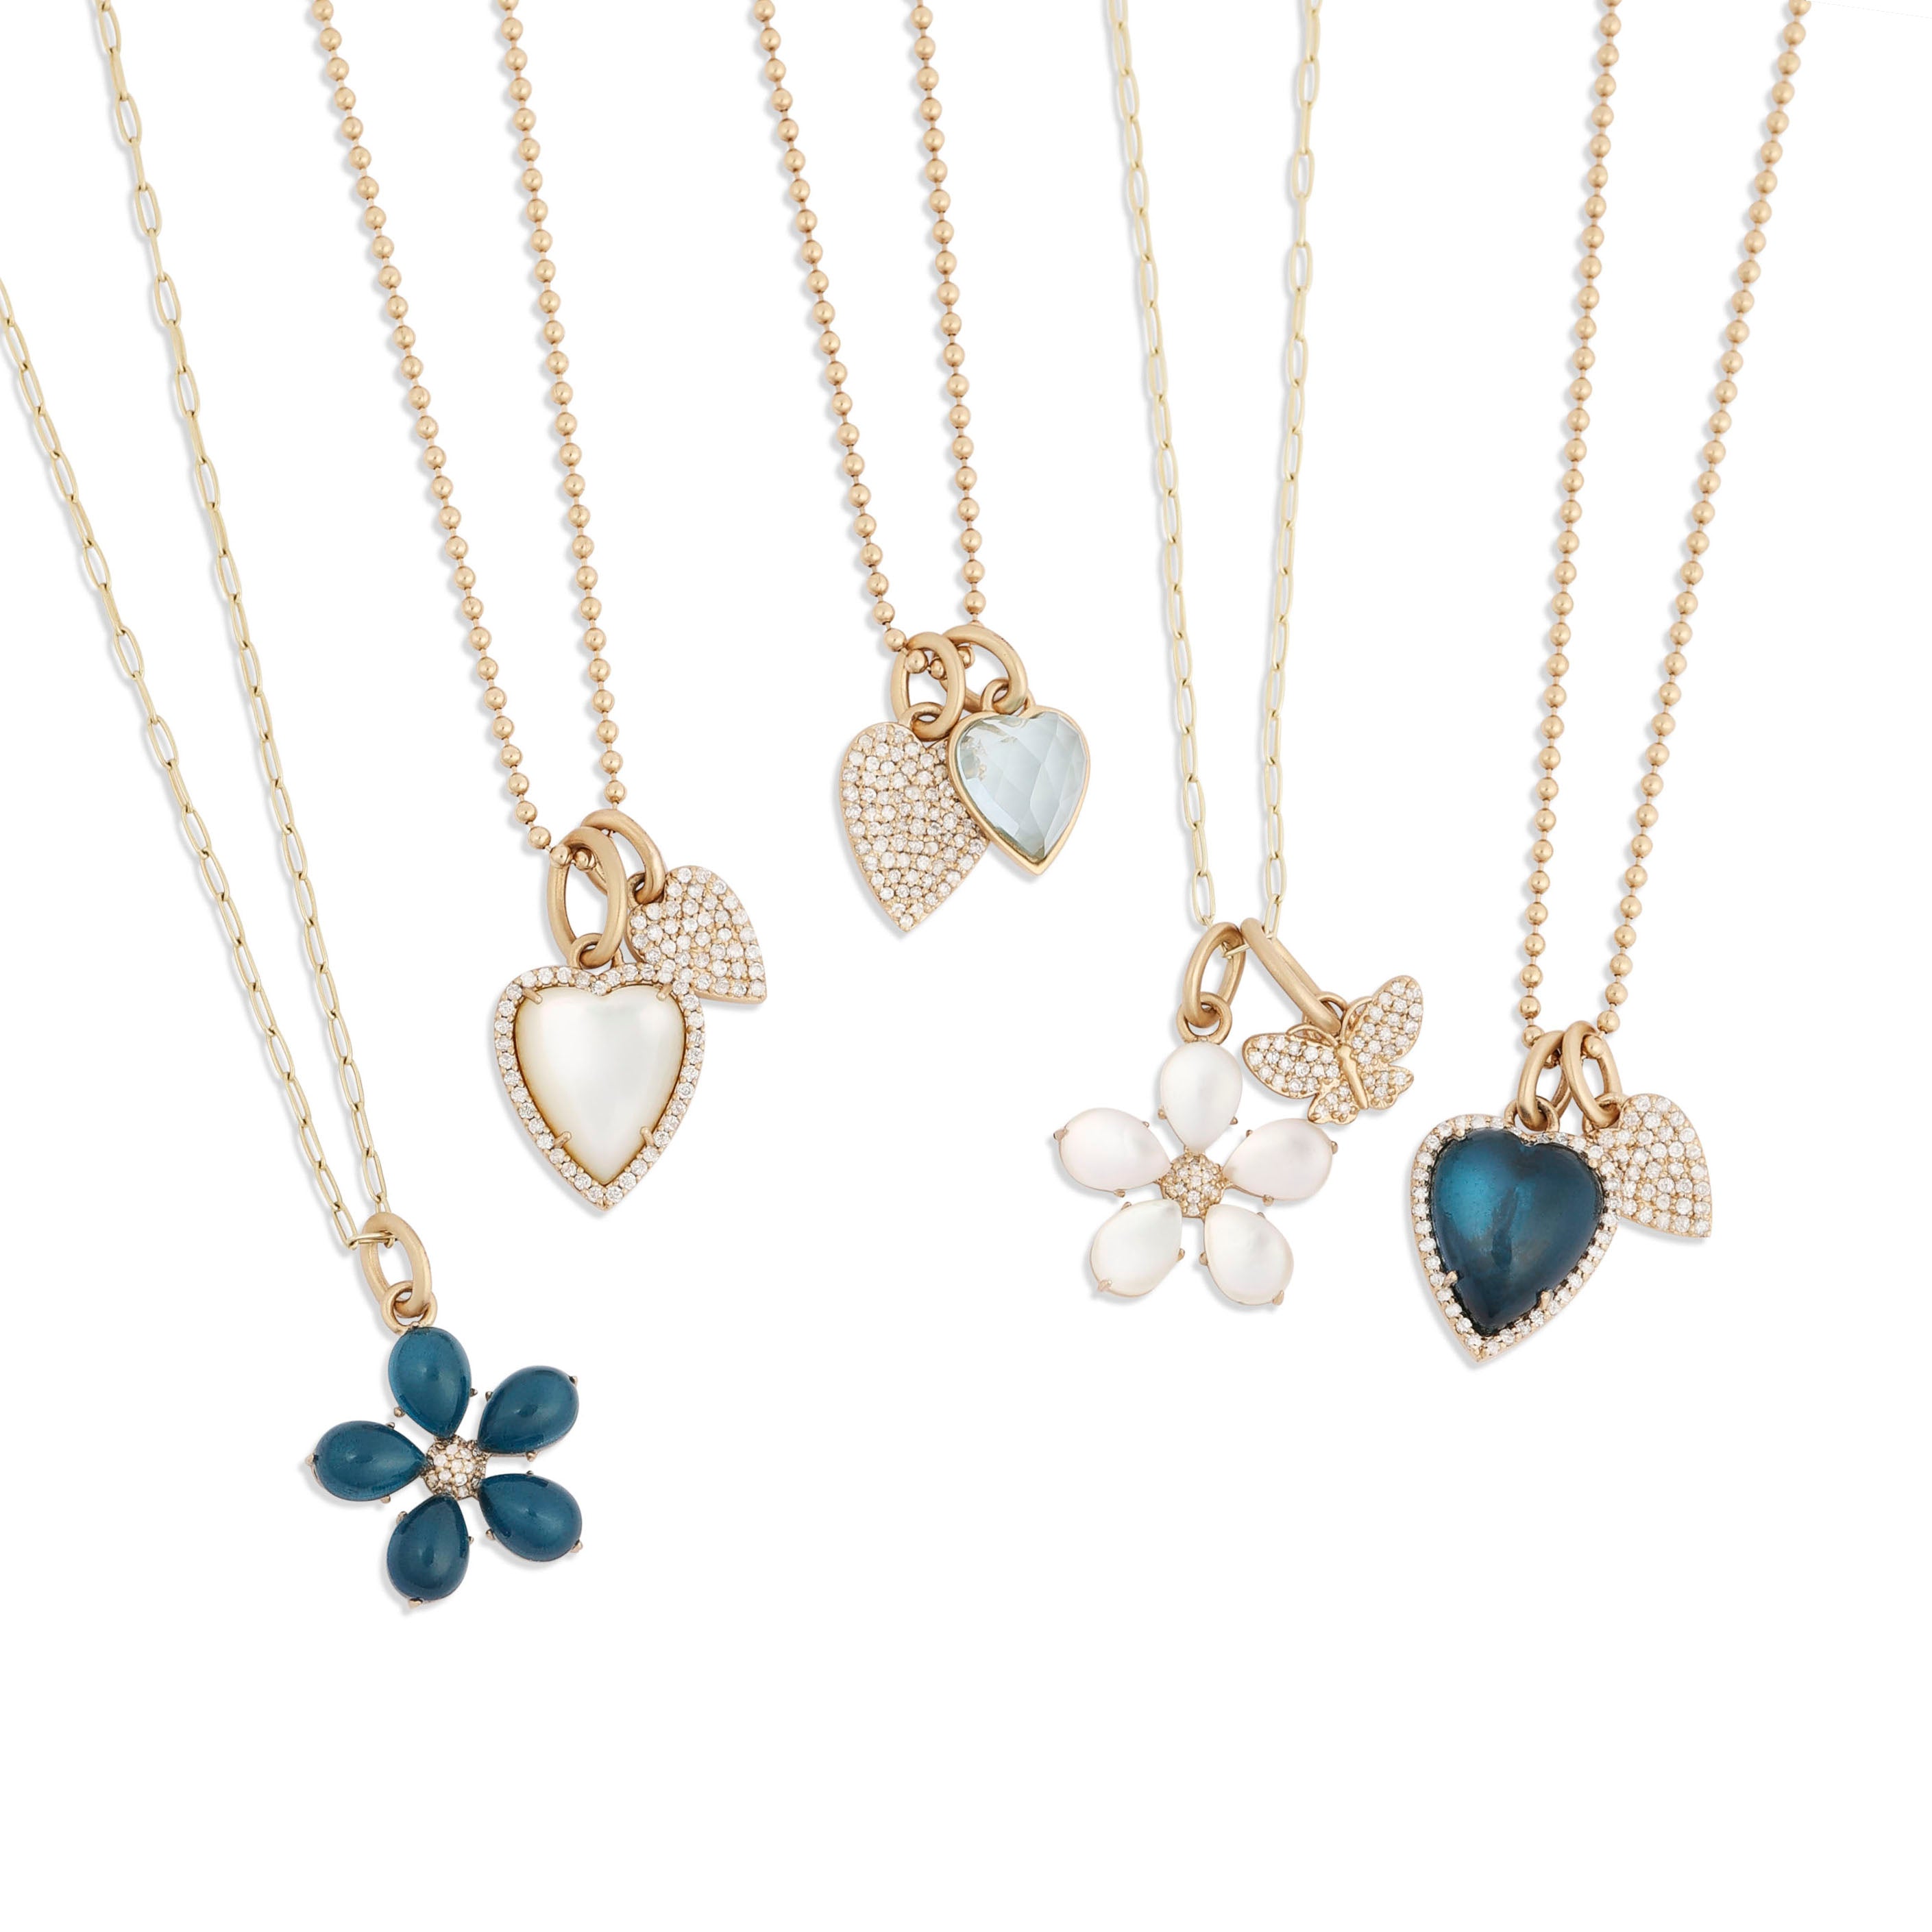 Liza Beth Single Diamond Extra Small Chain Necklace